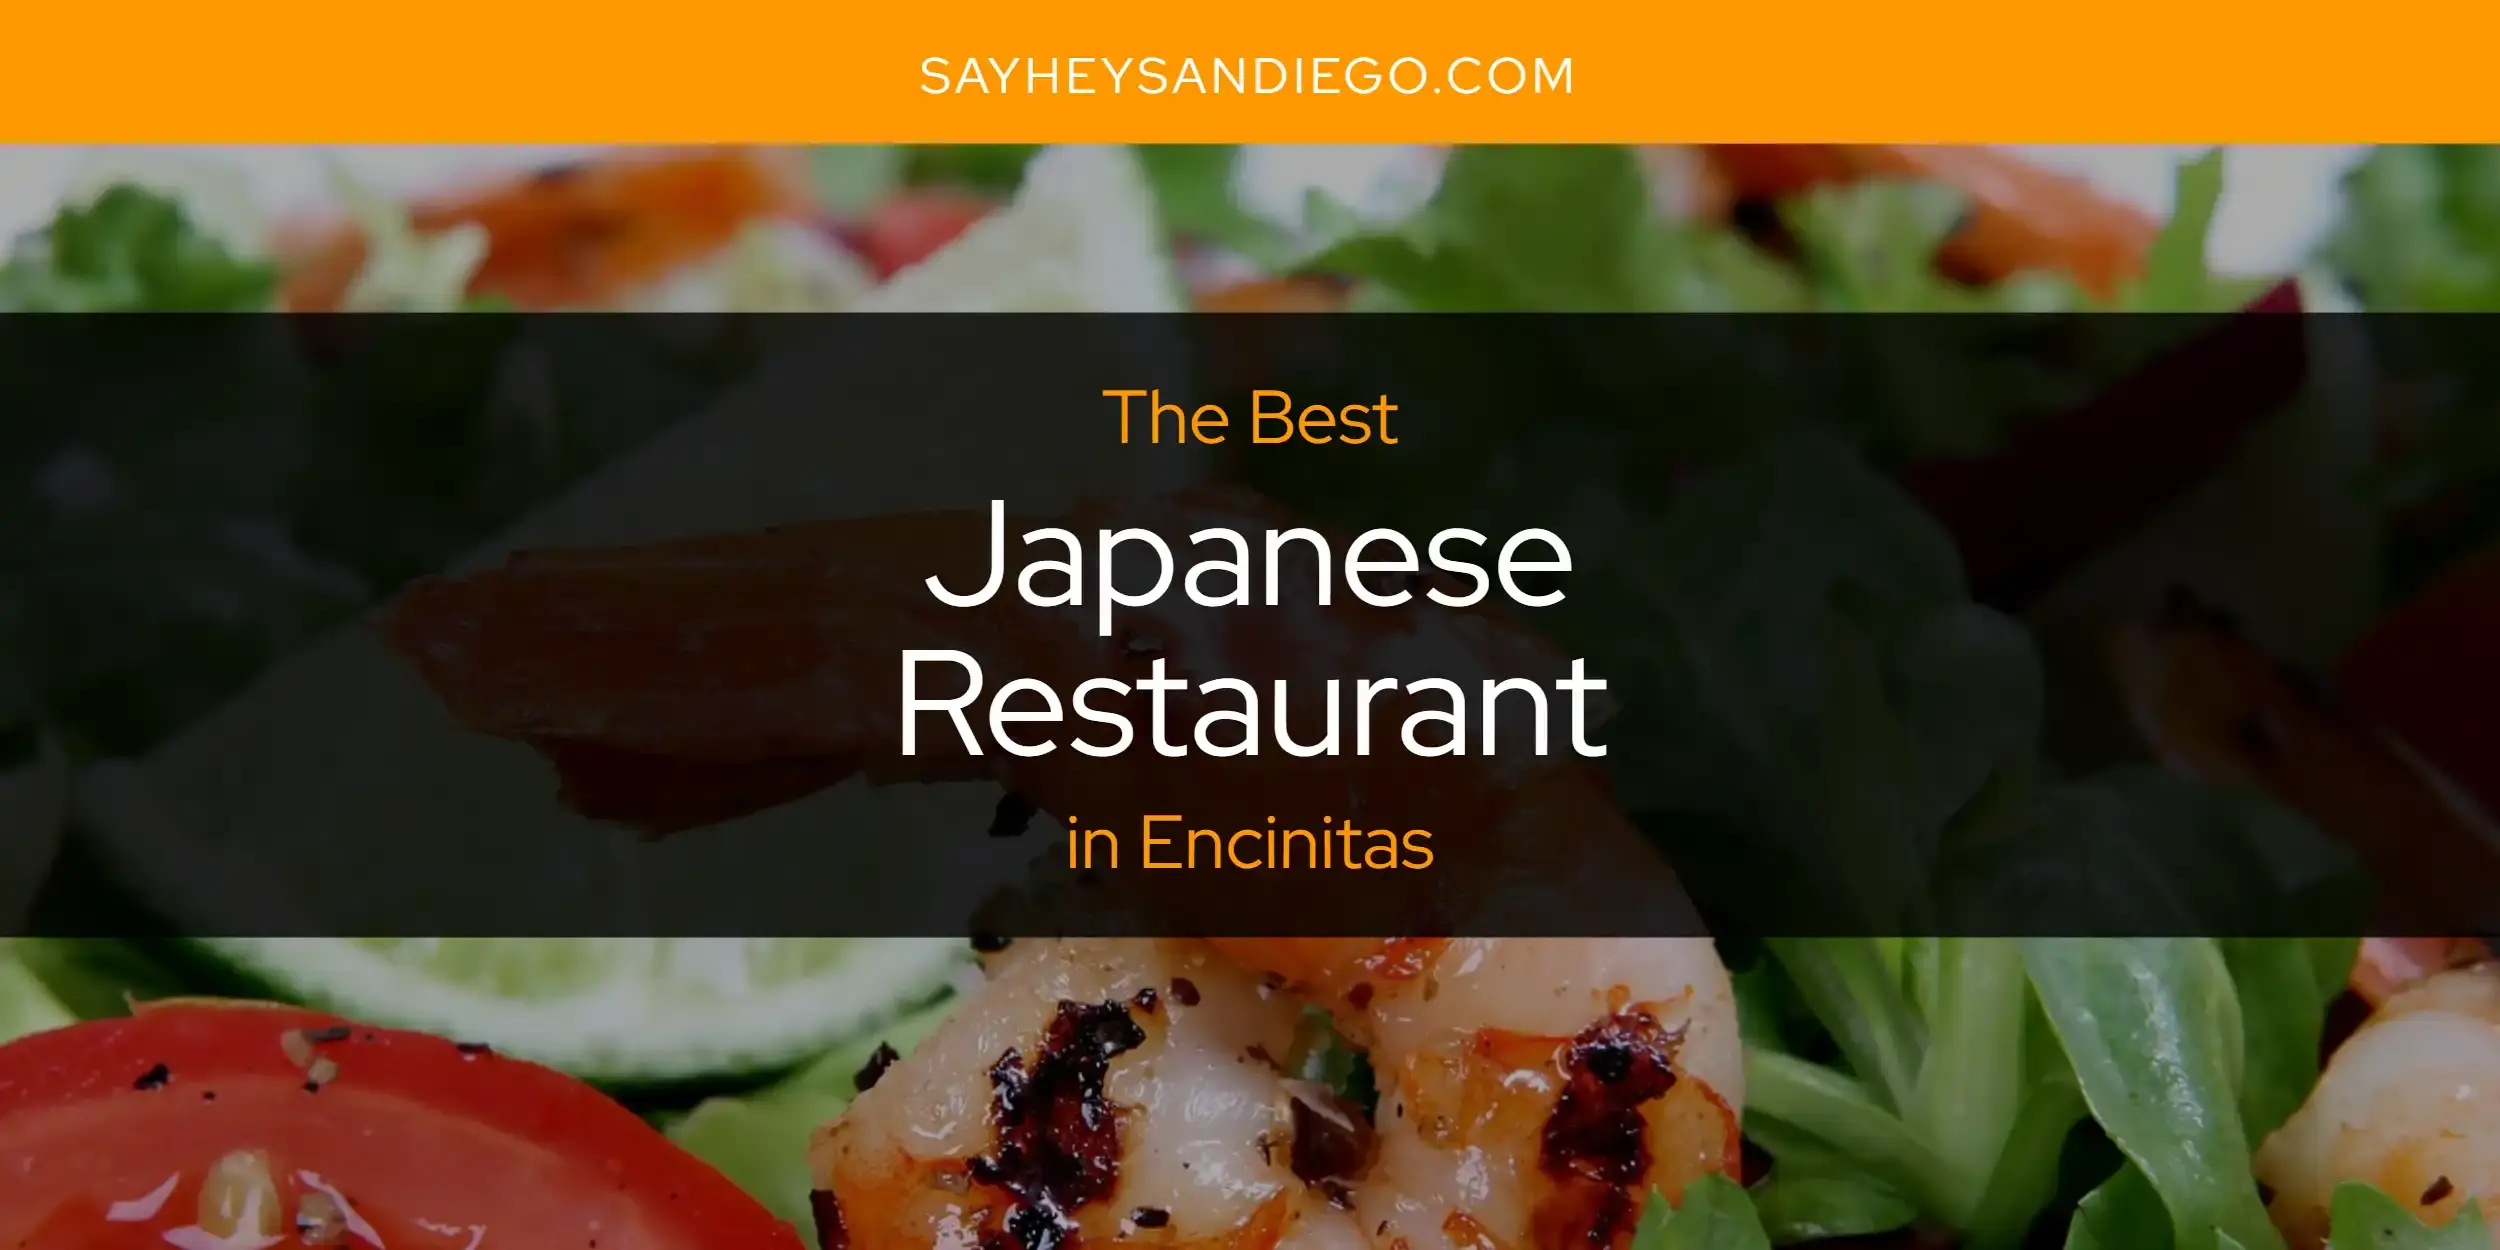 Best Japanese Restaurant in Encinitas? Here's the Top 13